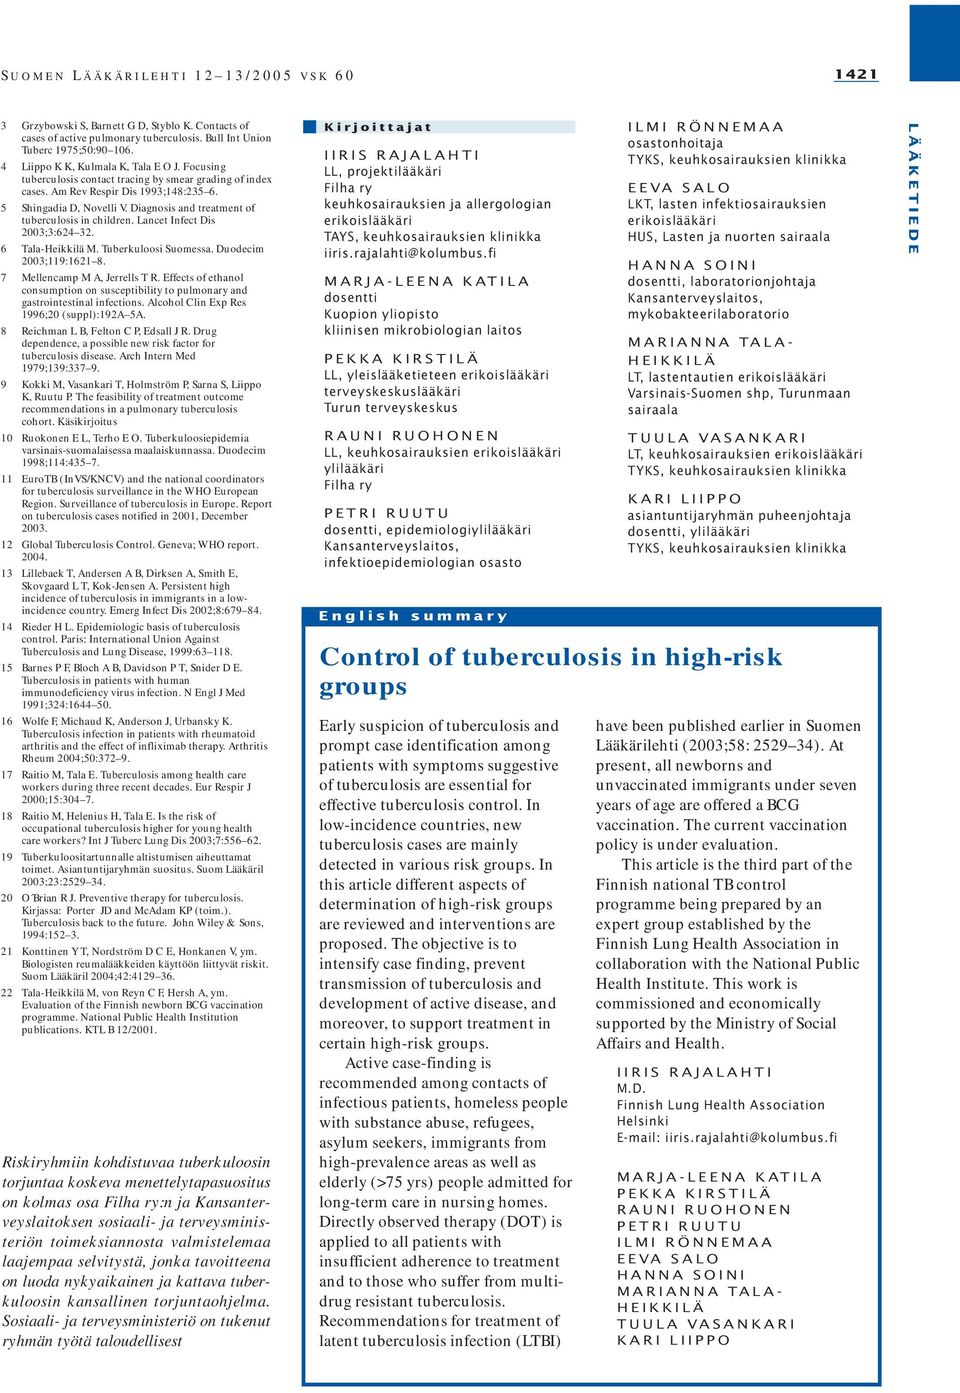 Diagnosis and treatment of tuberculosis in children. Lancet Infect Dis 2003;3:624 32. 6 Tala-Heikkilä M. Tuberkuloosi Suomessa. Duodecim 2003;119:1621 8. 7 Mellencamp M A, Jerrells T R.